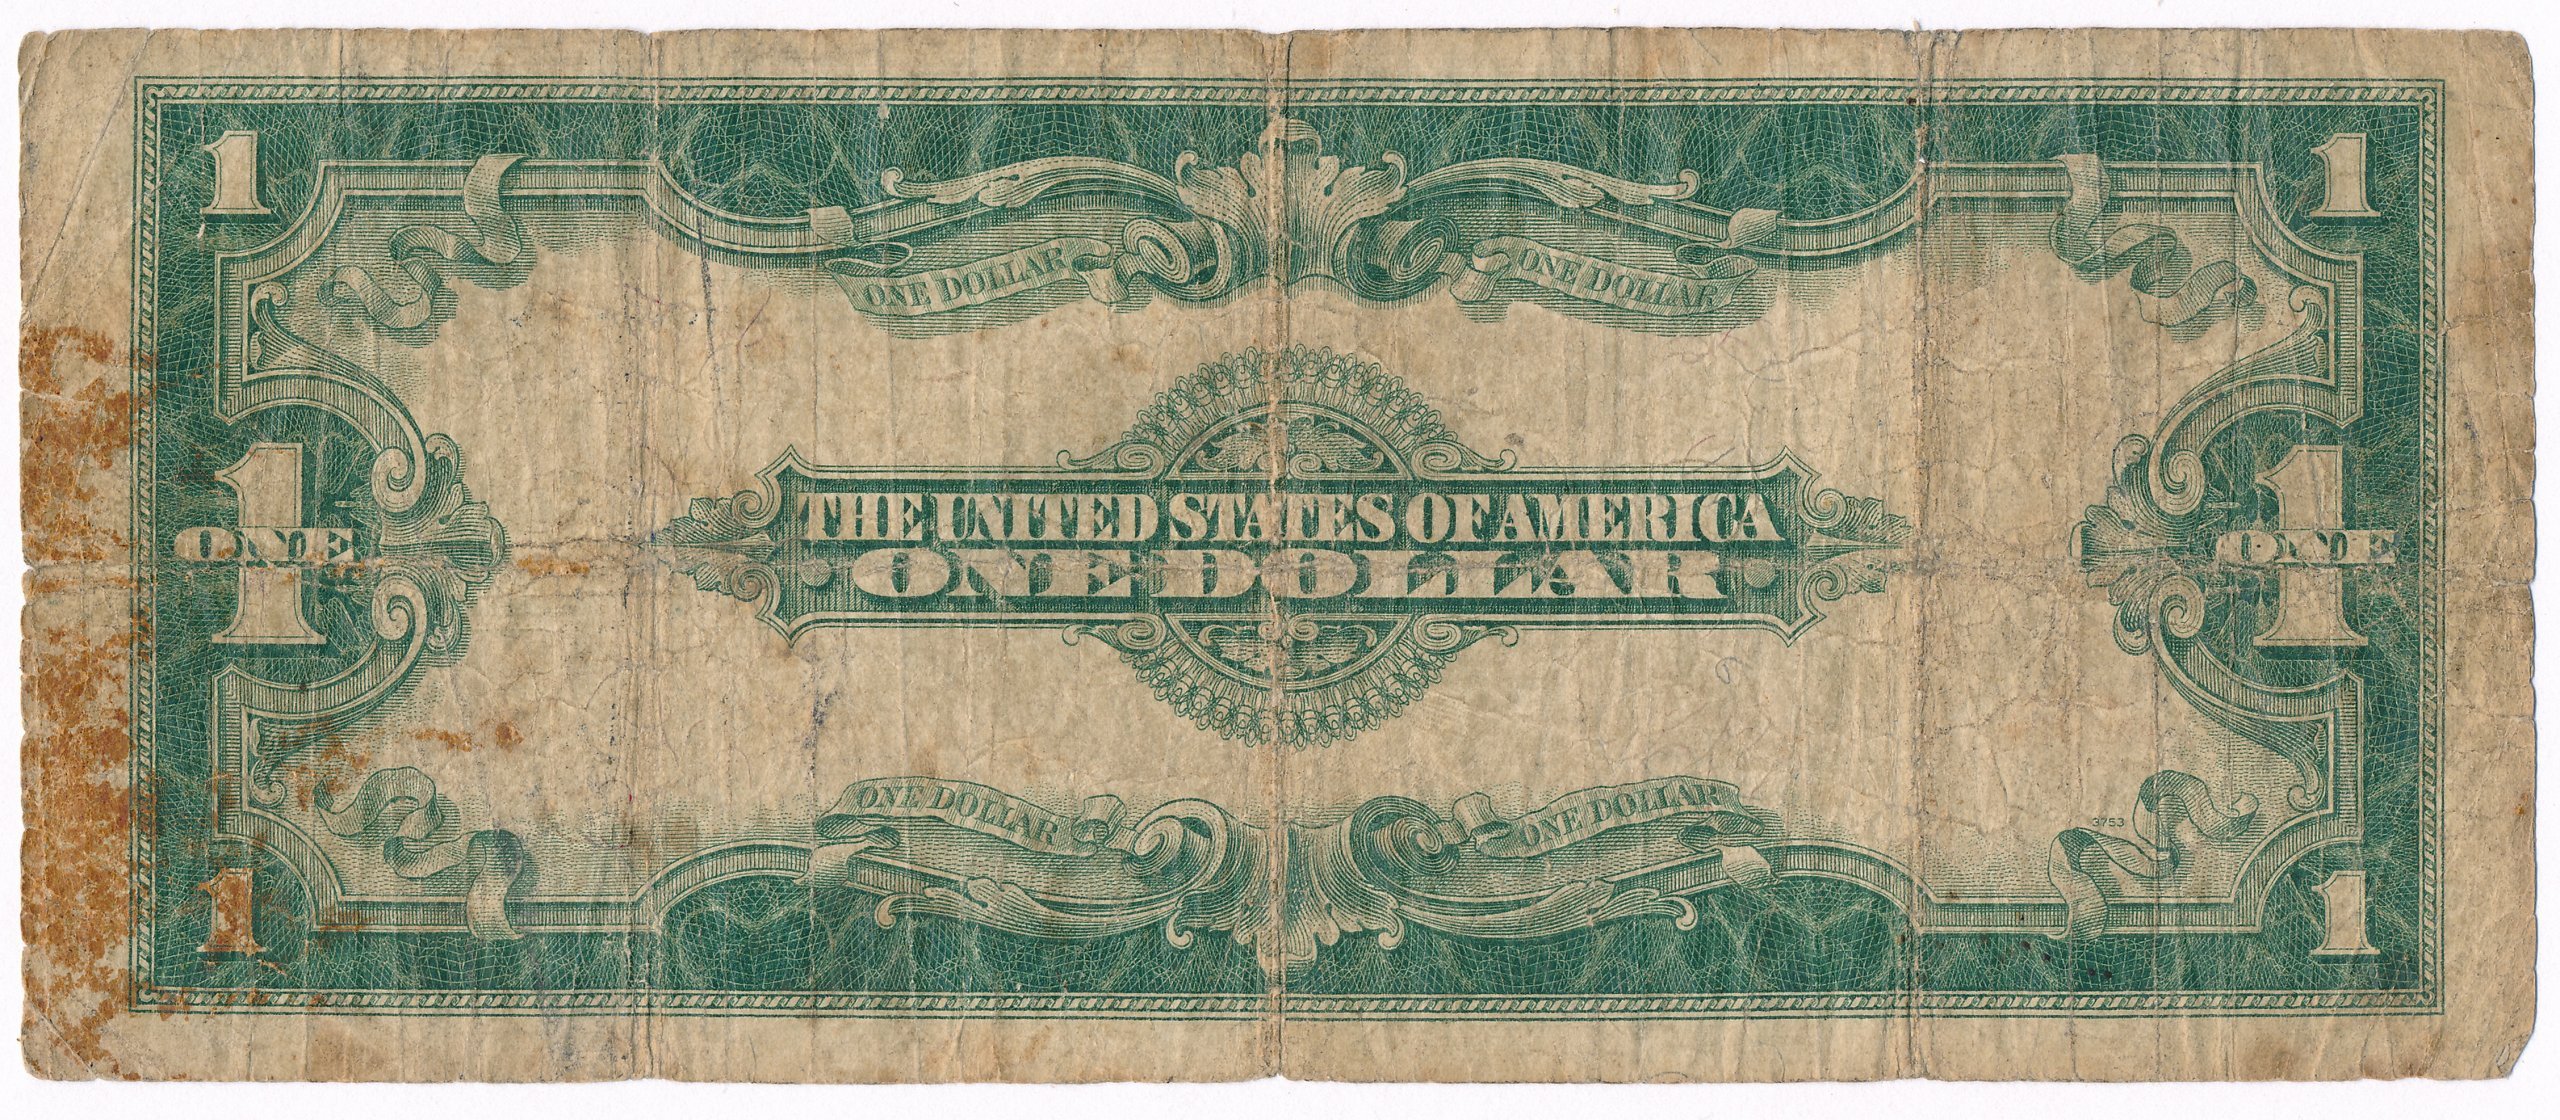 Banknot USA 1 Dolar 